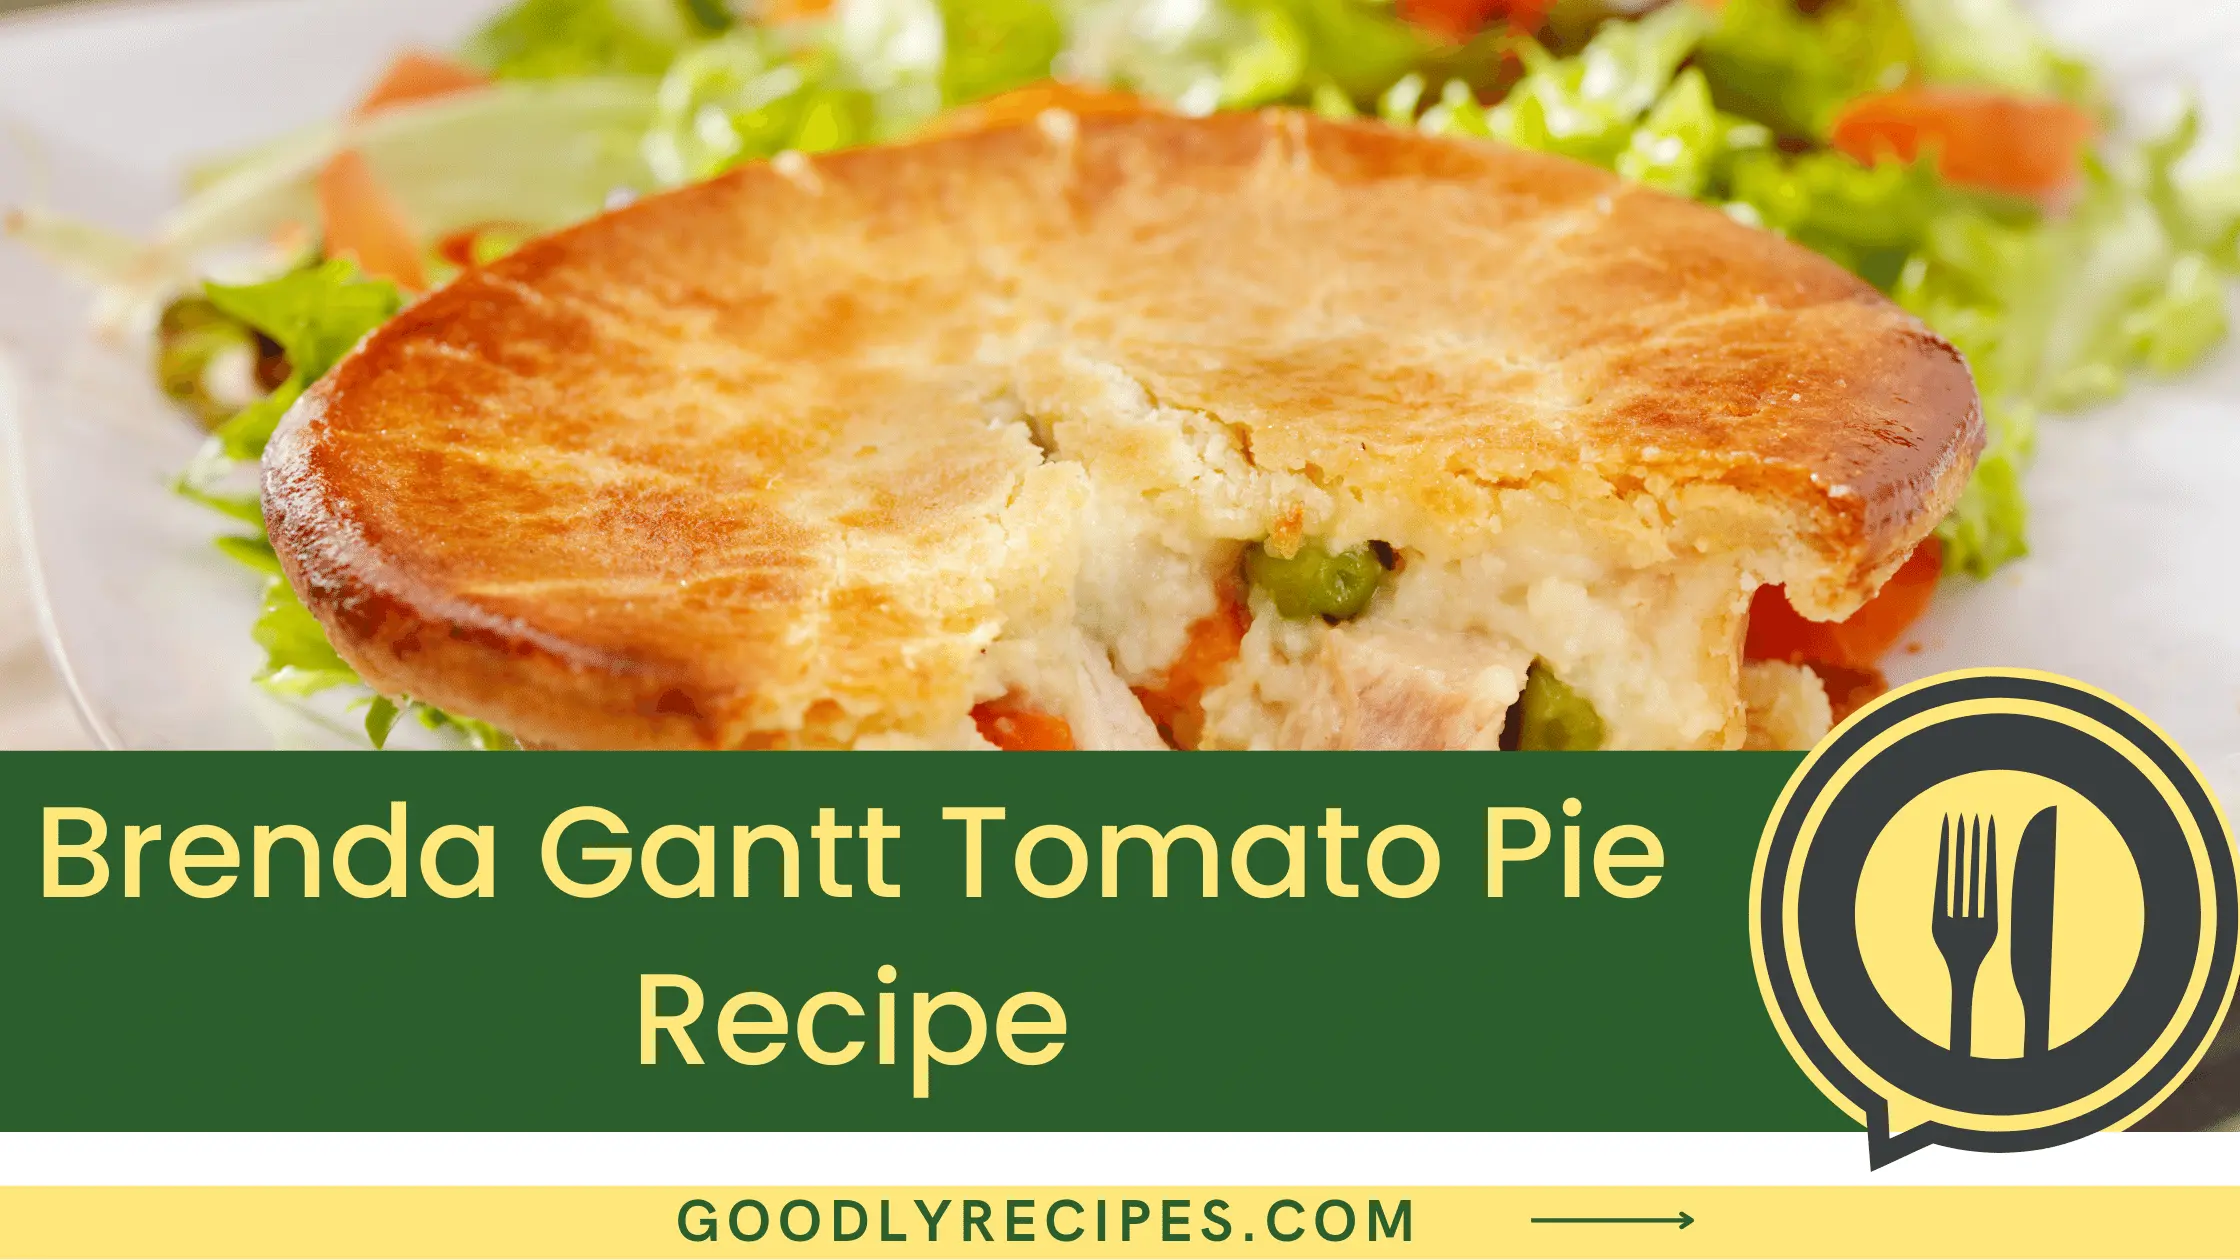 Brenda Gantt Tomato Pie Recipe